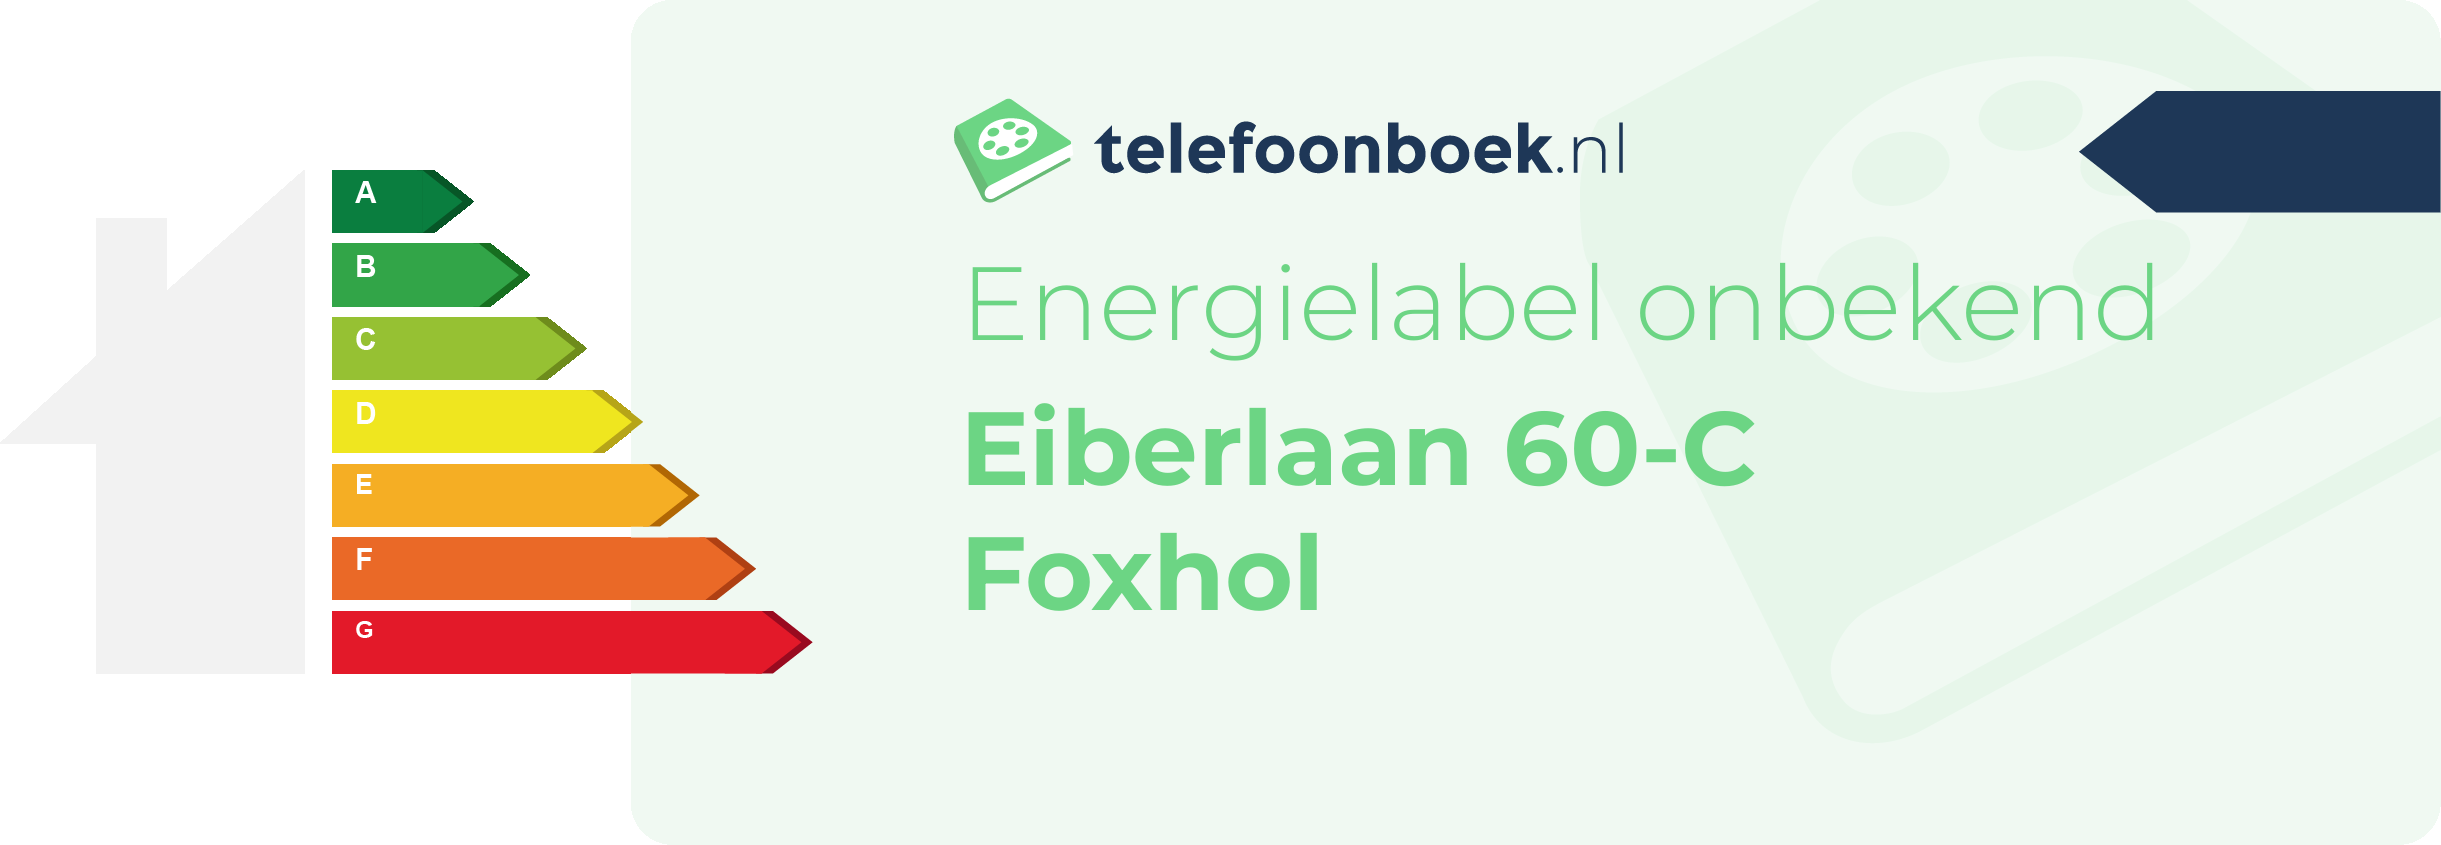 Energielabel Eiberlaan 60-C Foxhol